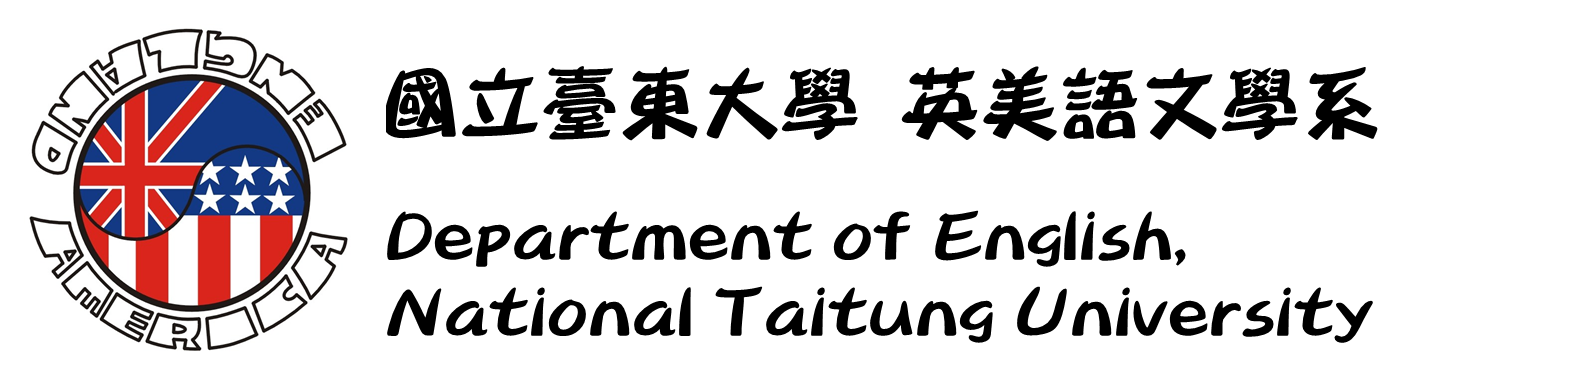 臺東大學英美語文學系 Department of English, National Taitung University